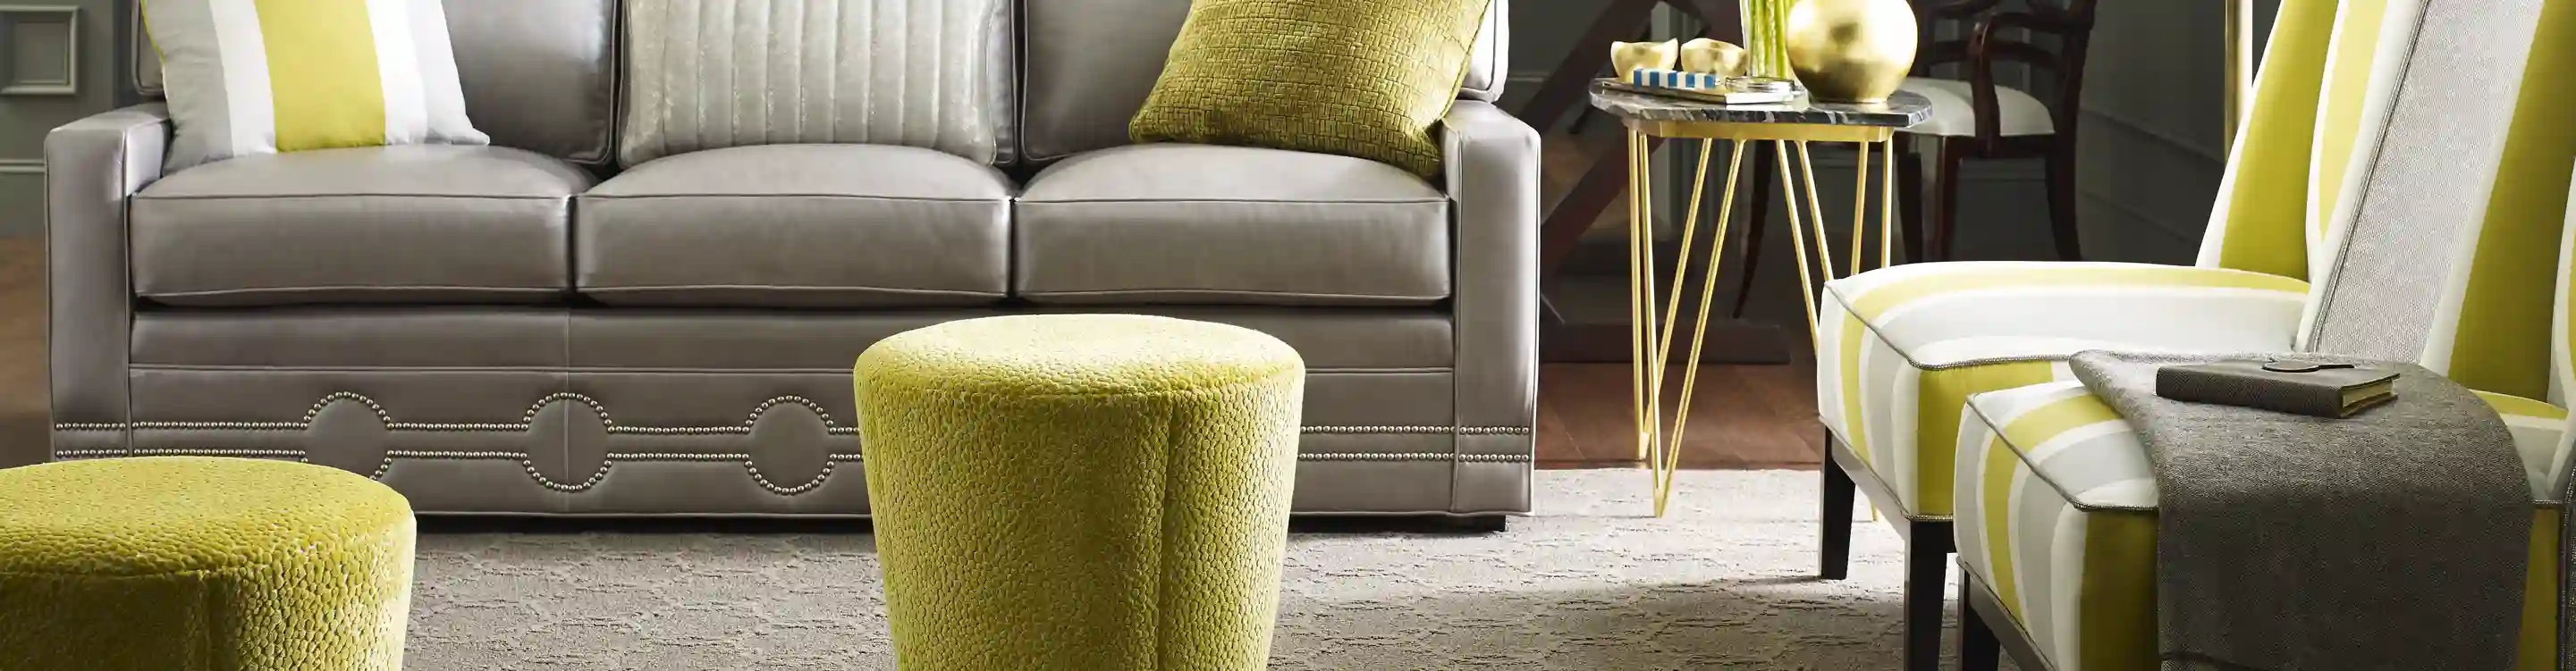 Grey sofa in living room with tan area rug over hardwood floors